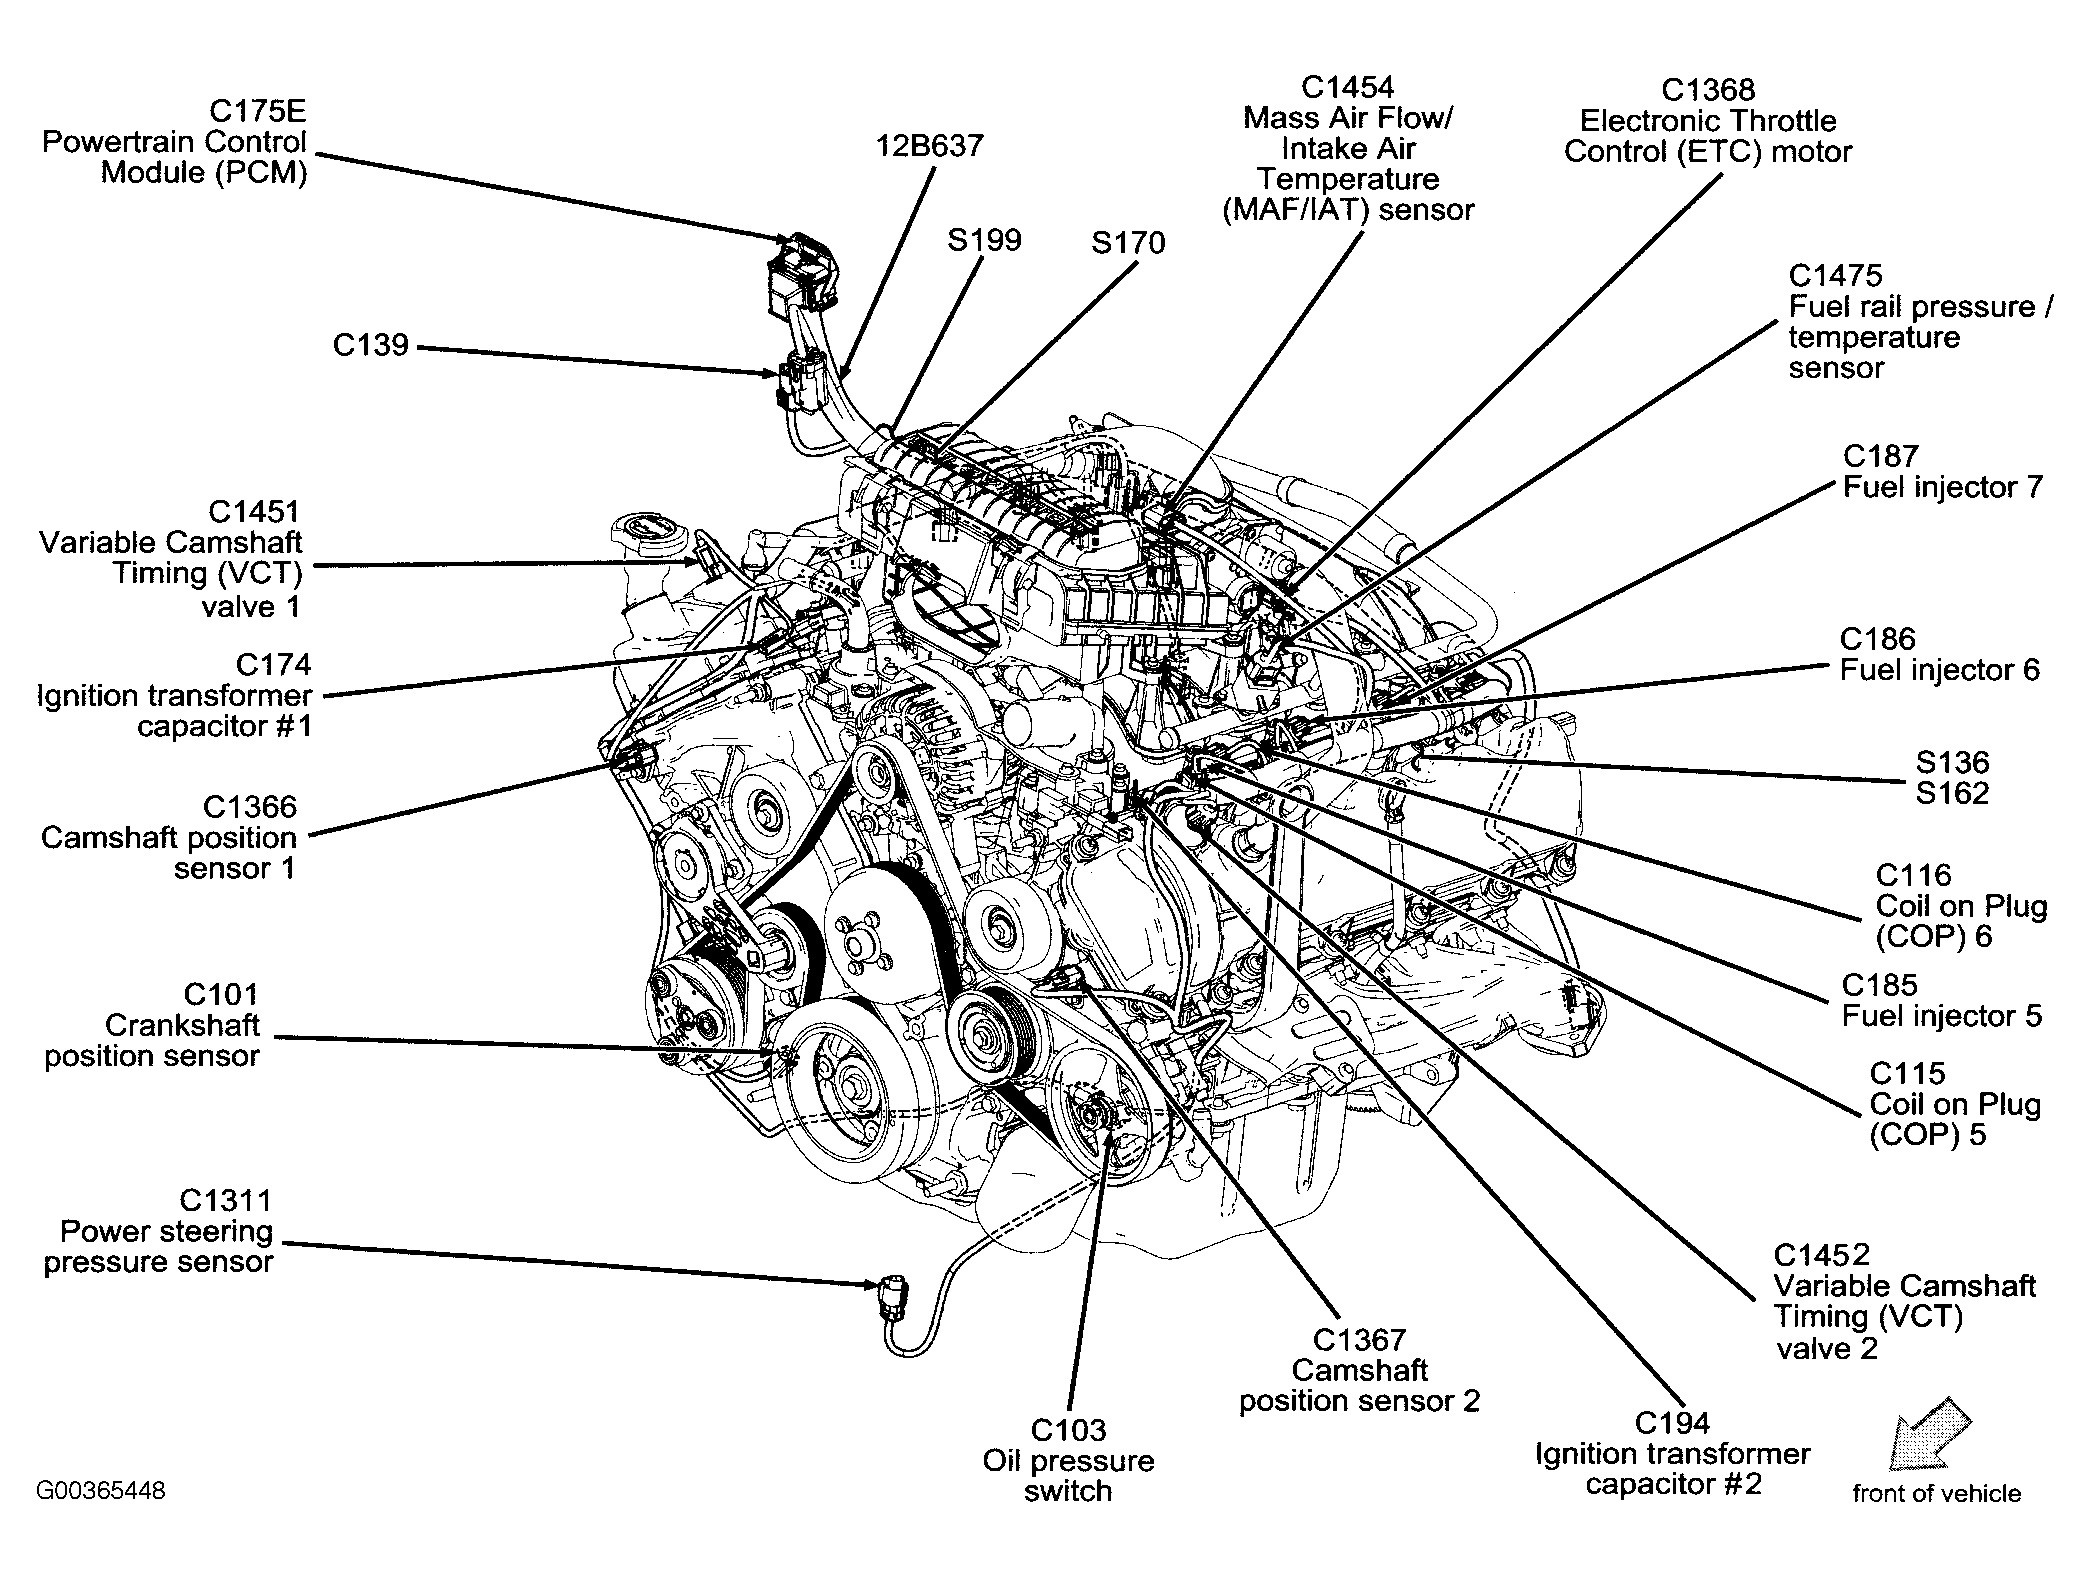 2004 ford Taurus Engine Diagram 1998 ford Taurus Engine Diagram Wiring Diagram New Of 2004 ford Taurus Engine Diagram